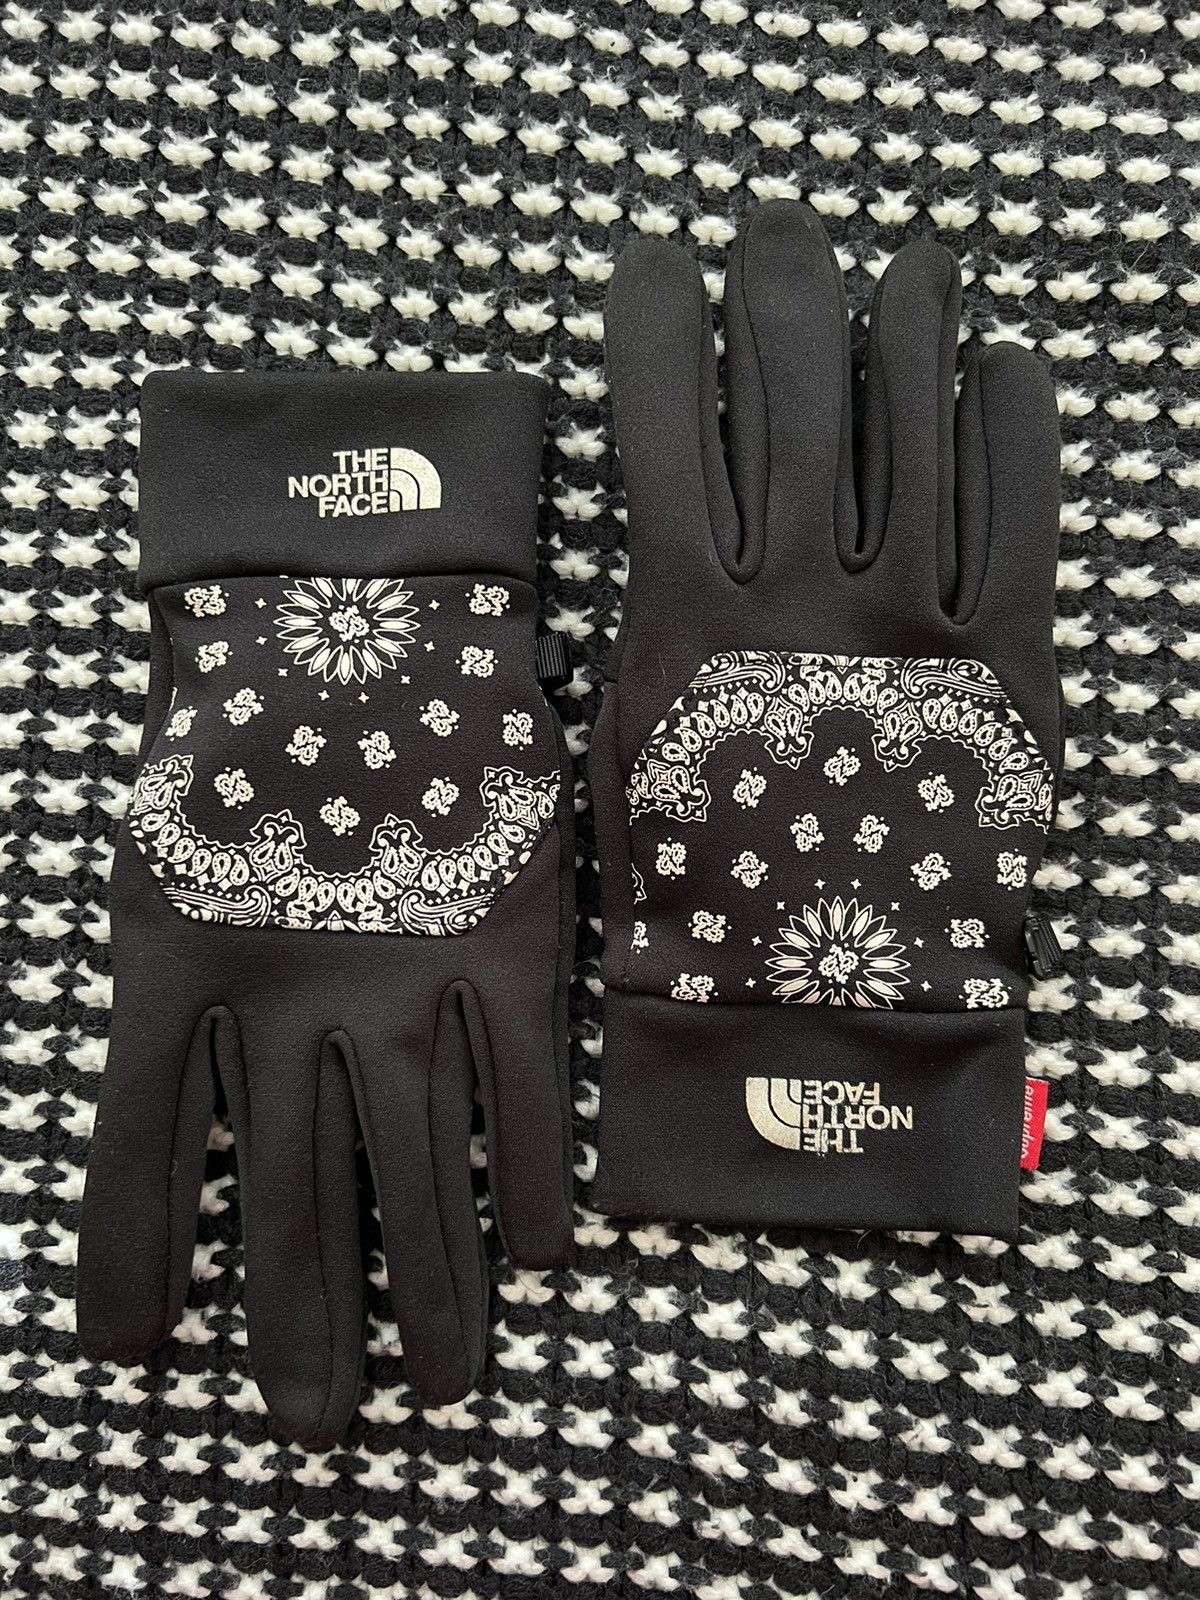 Supreme Supreme The North Face Bandana Gloves | Grailed